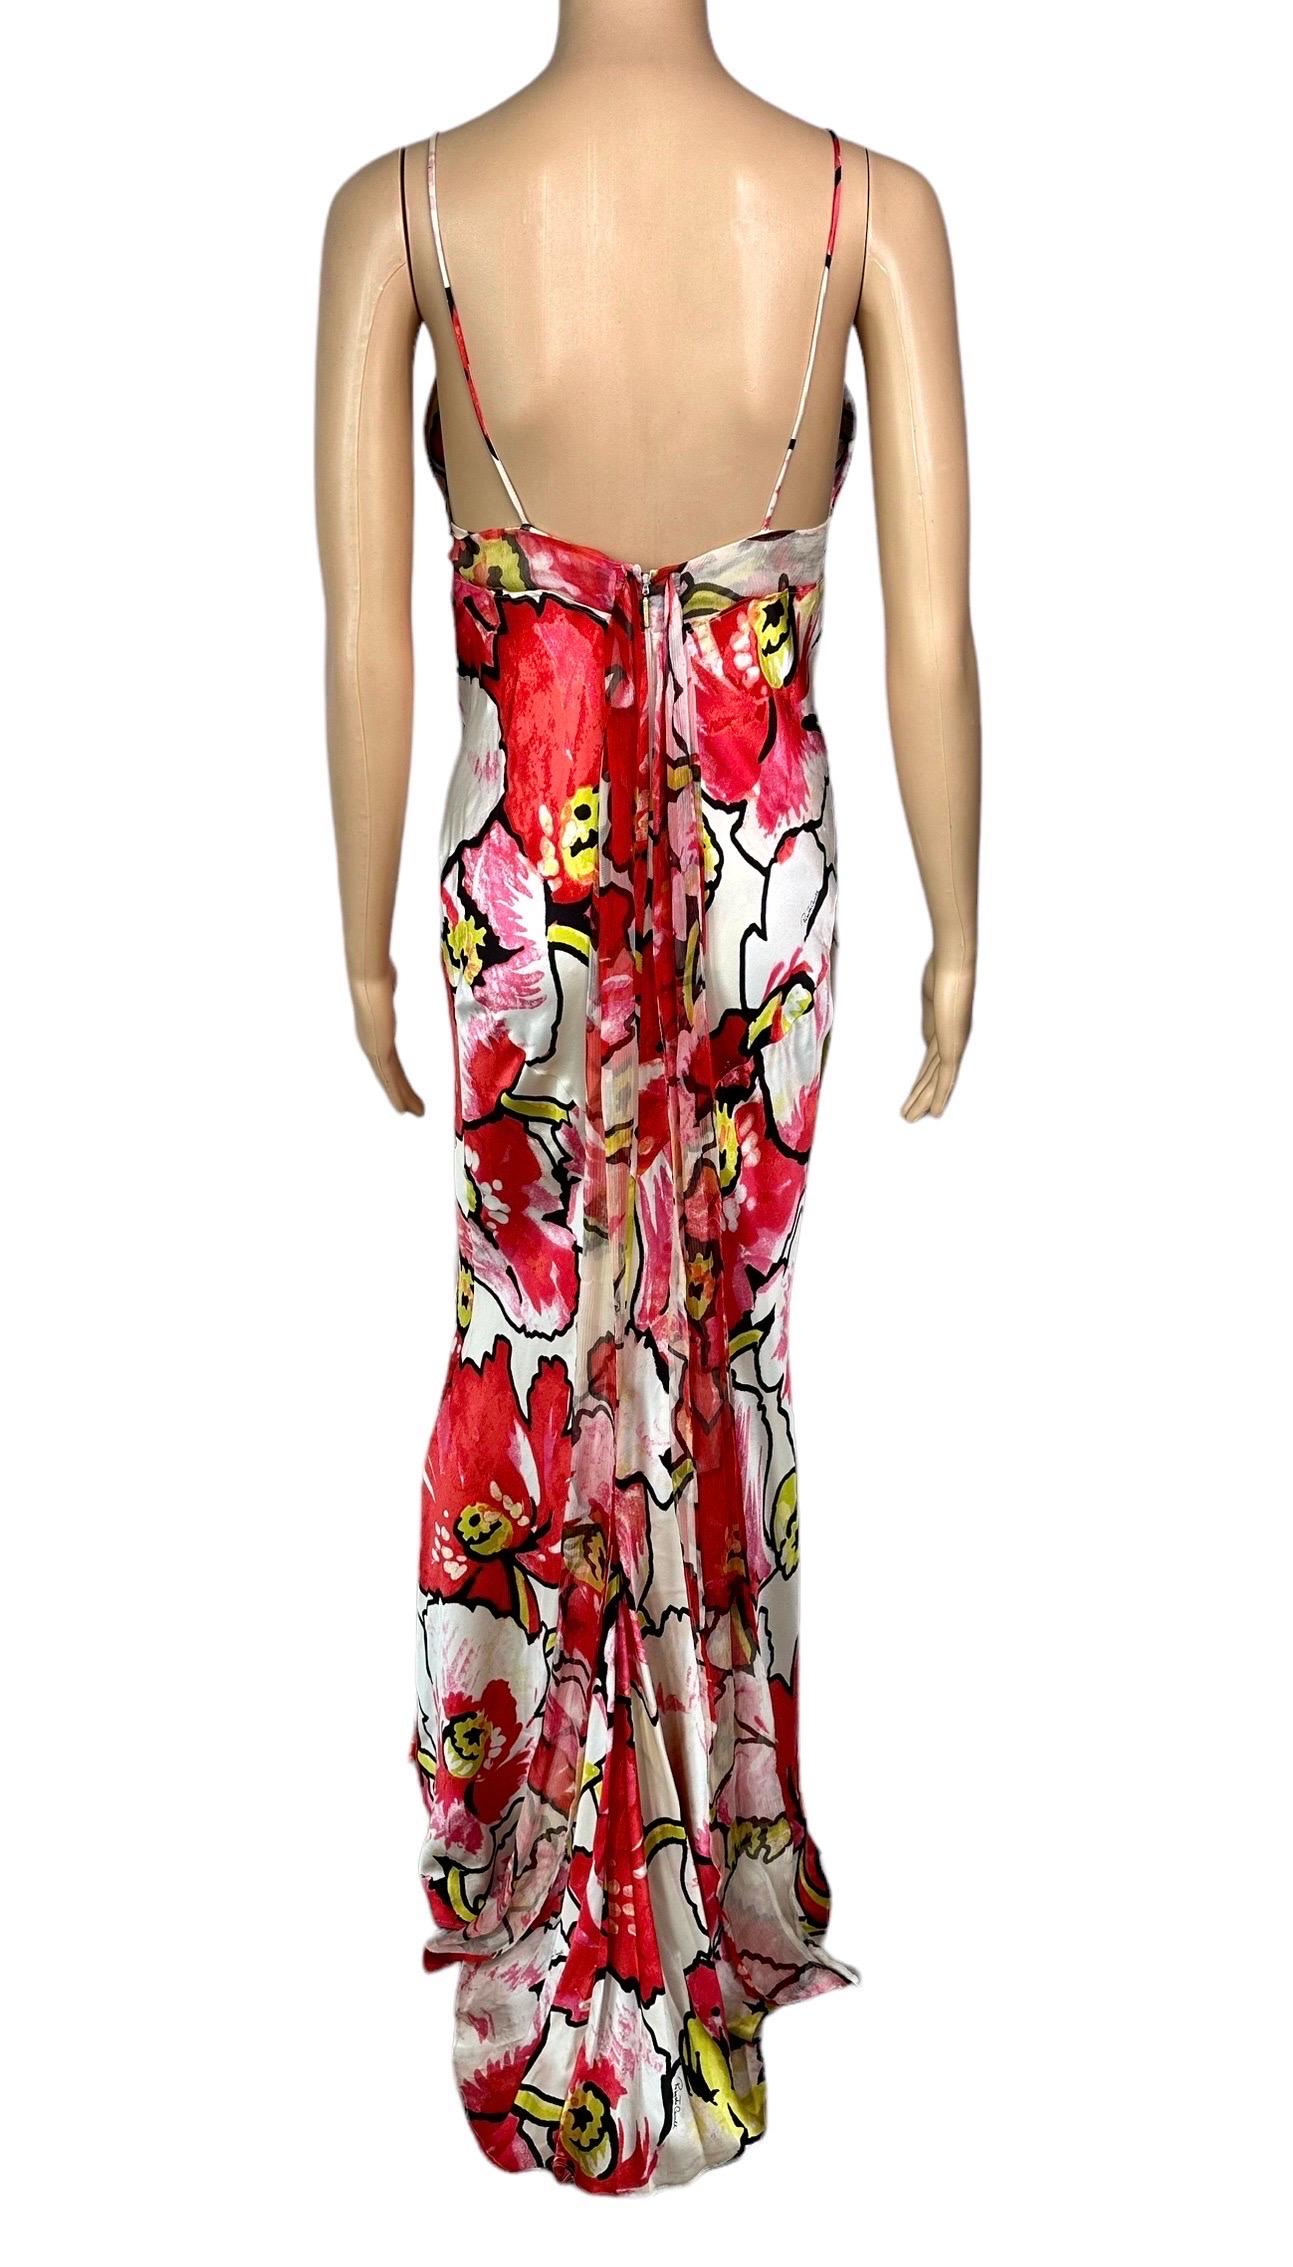 Women's Roberto Cavalli S/S 2005 Silk Floral Print Slip Evening Dress & Wrap 2 Piece Set For Sale